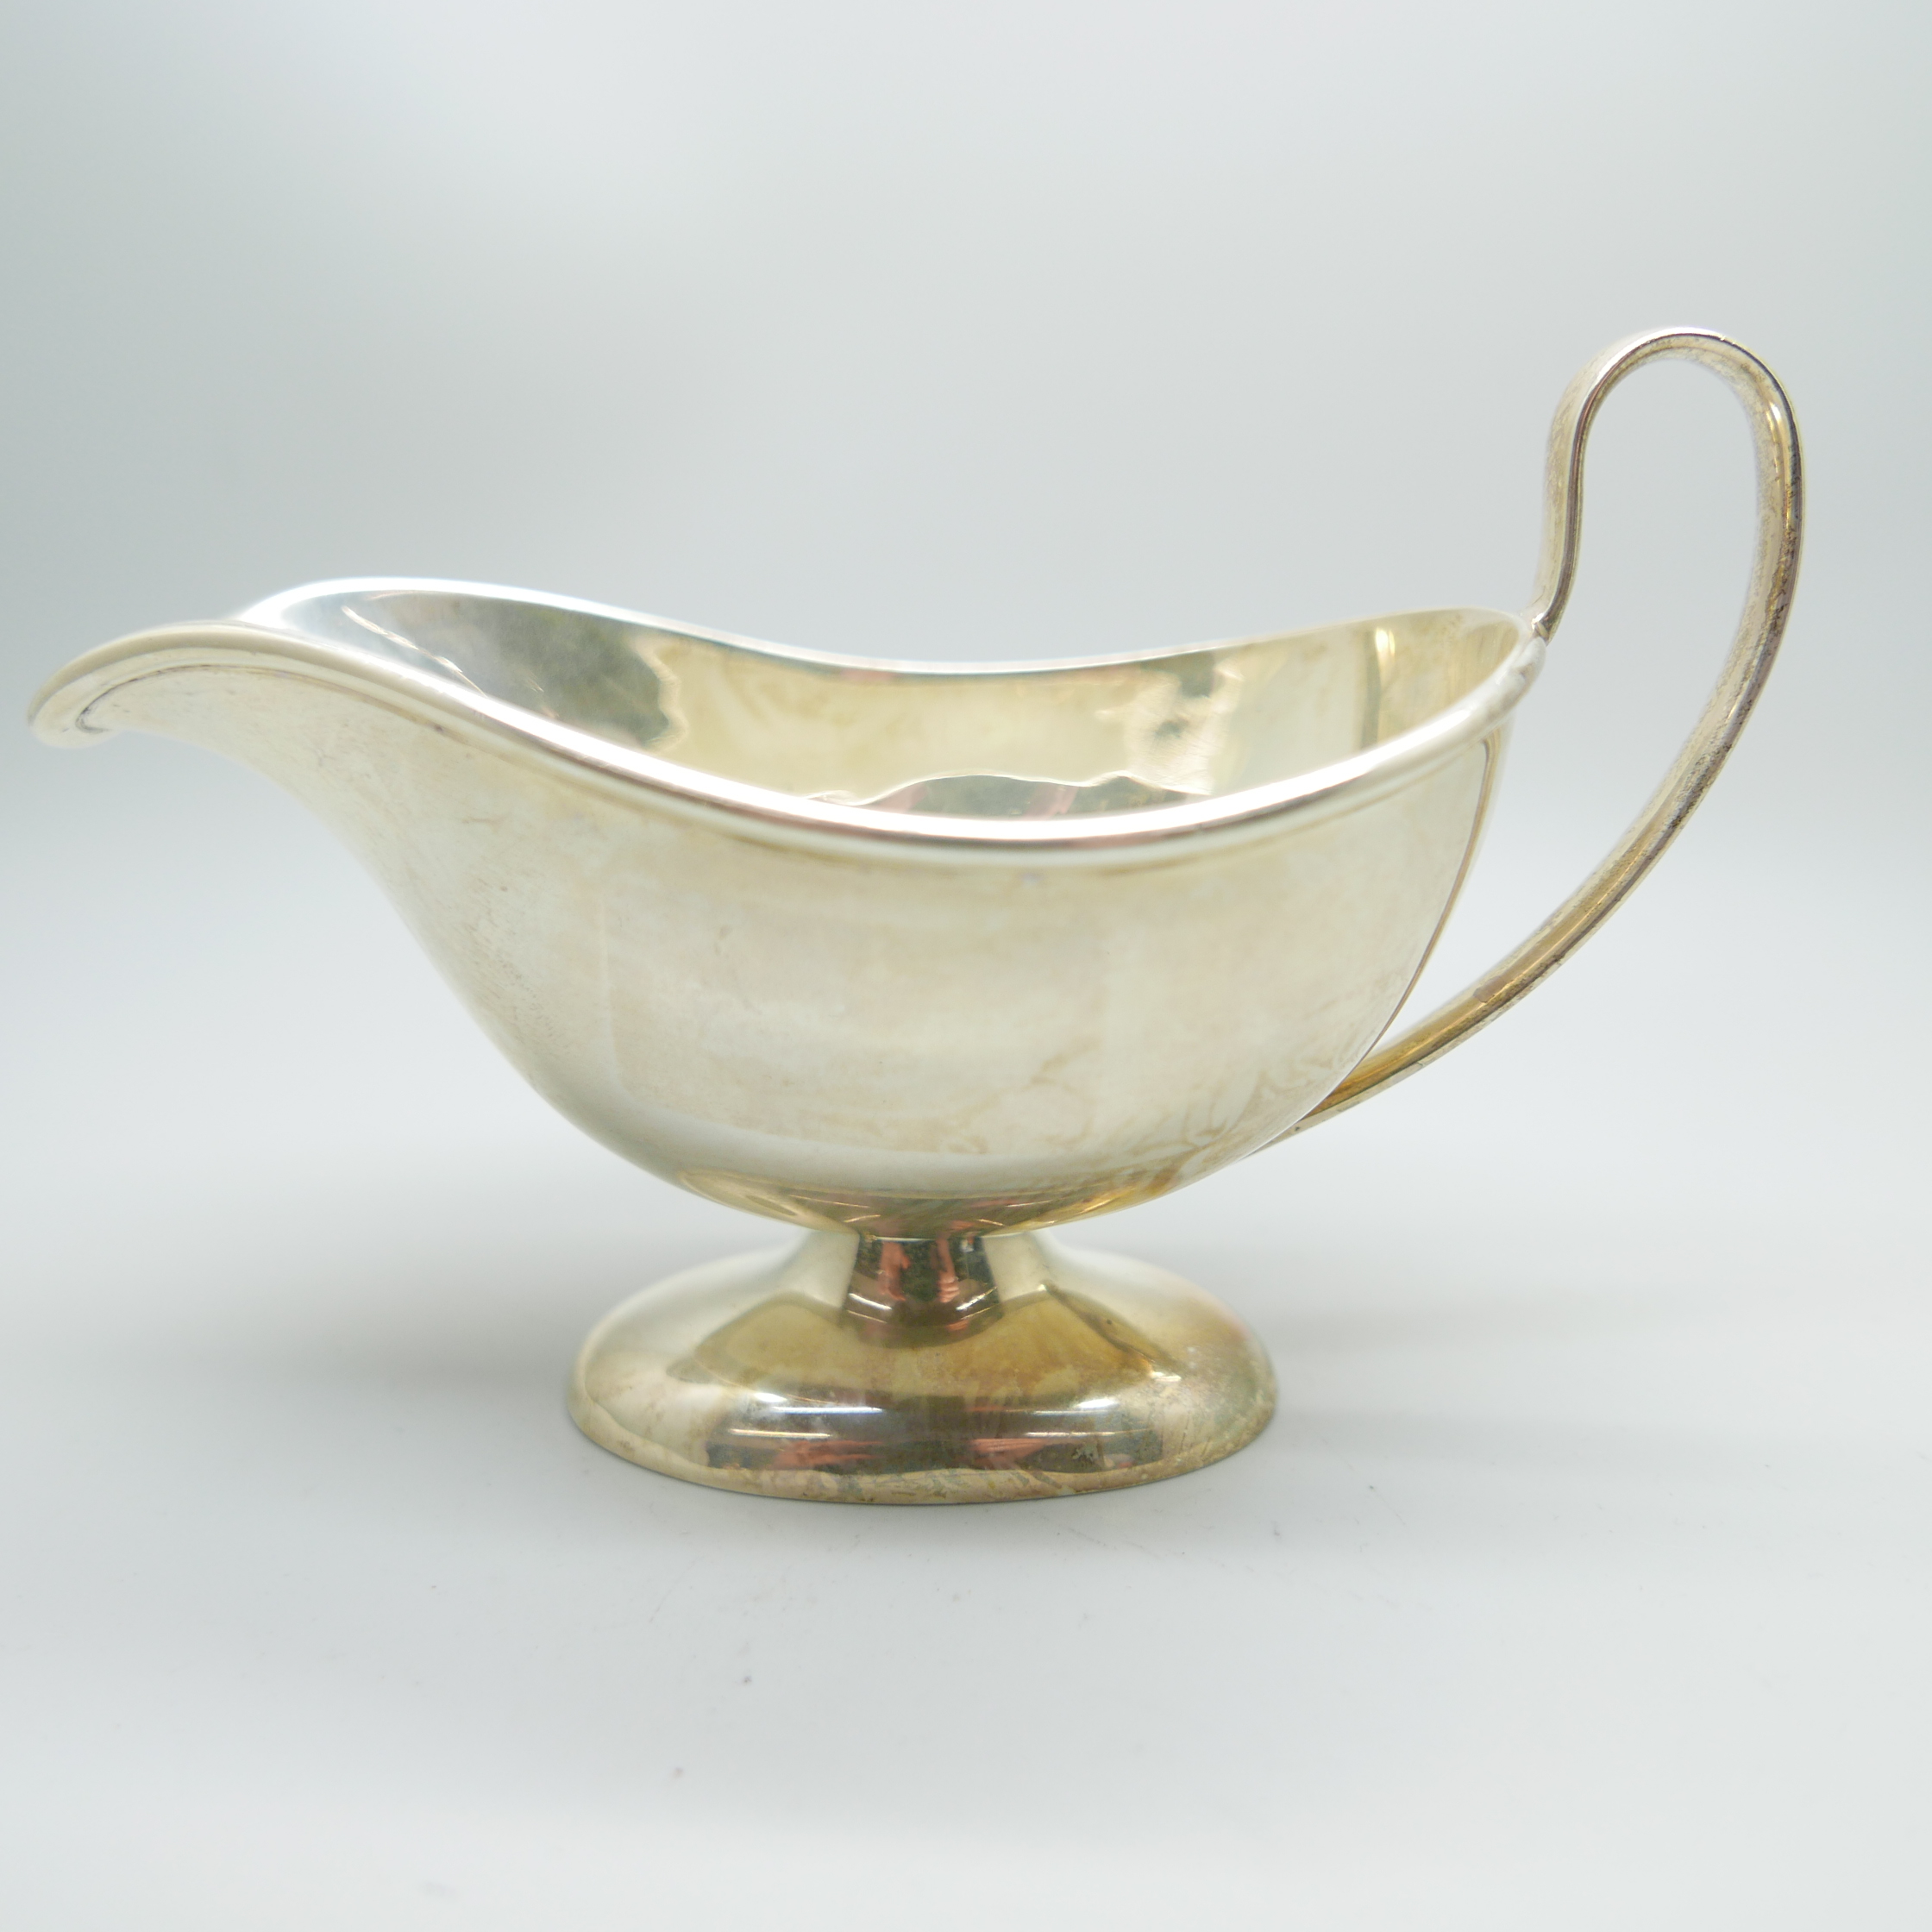 A silver jug, 160g - Image 3 of 4